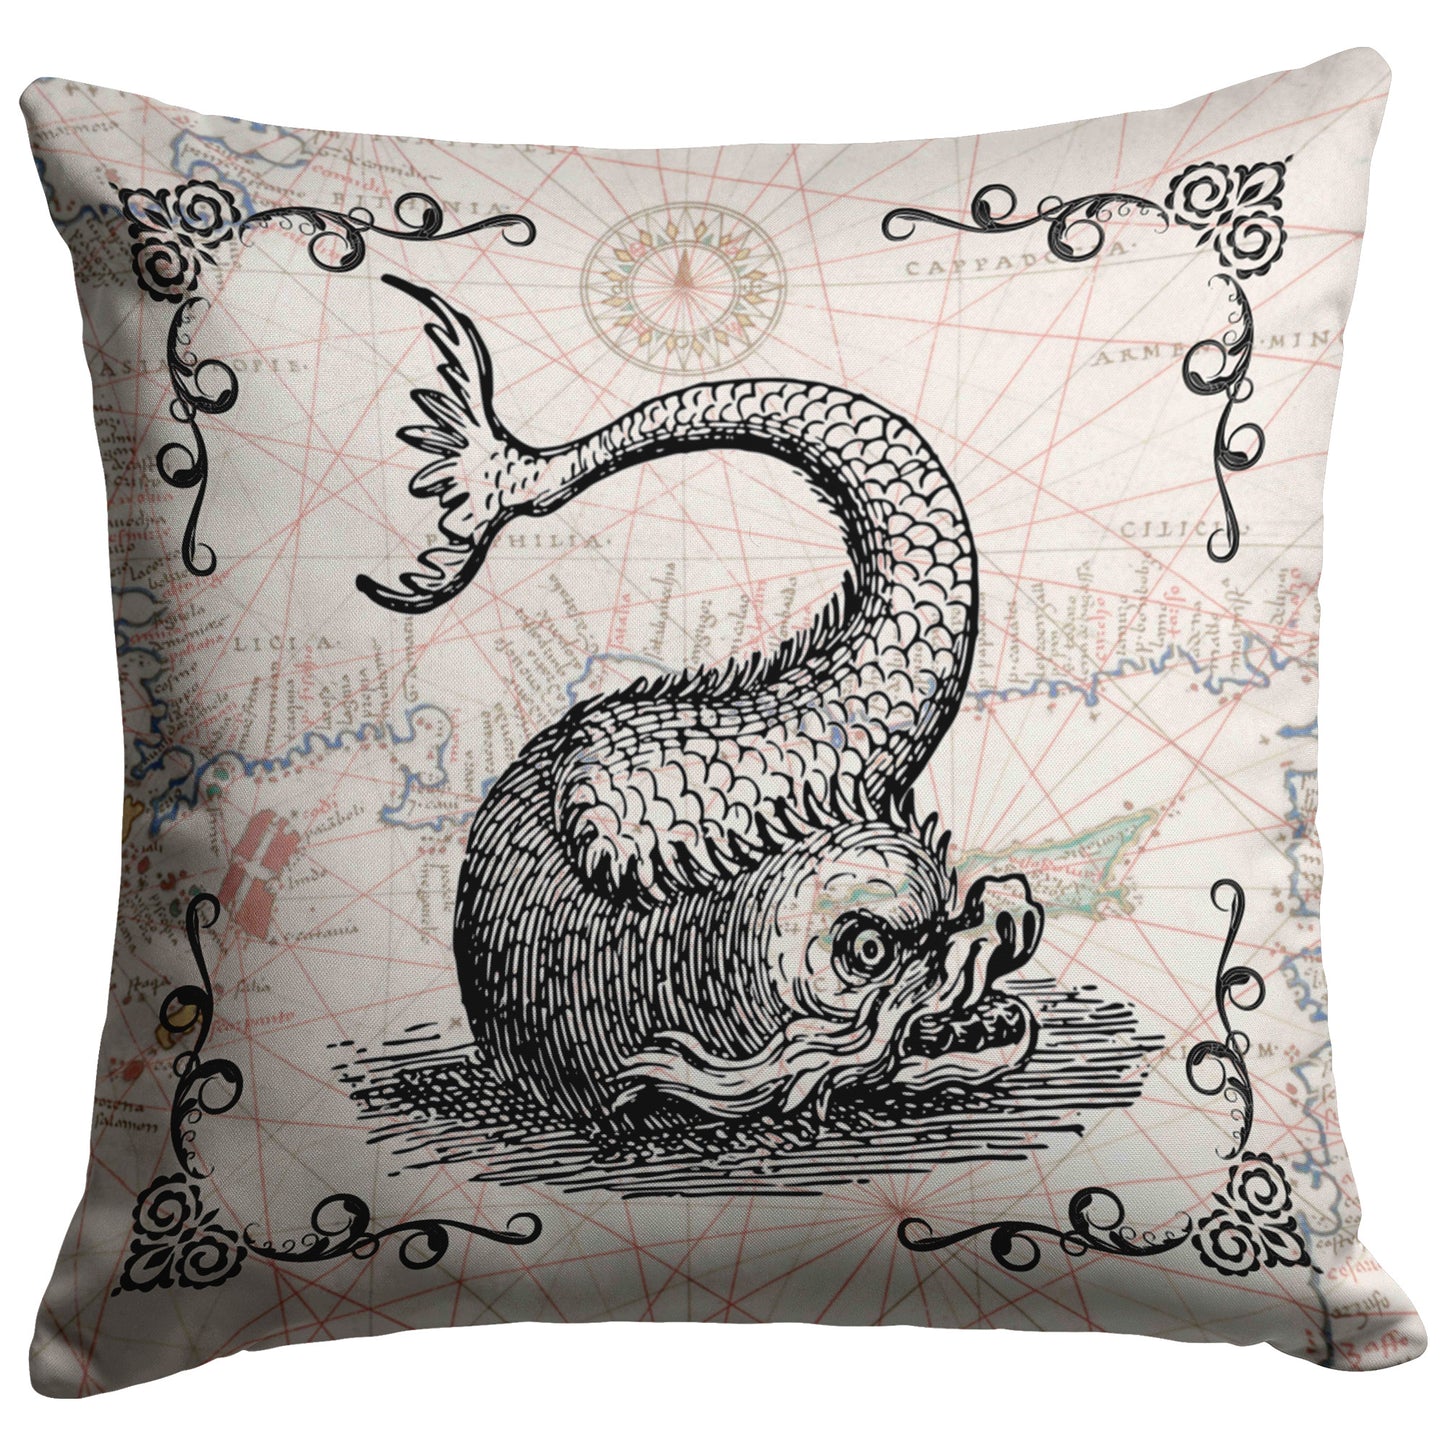 Sea Monster Throw Pillow - Twist Fish